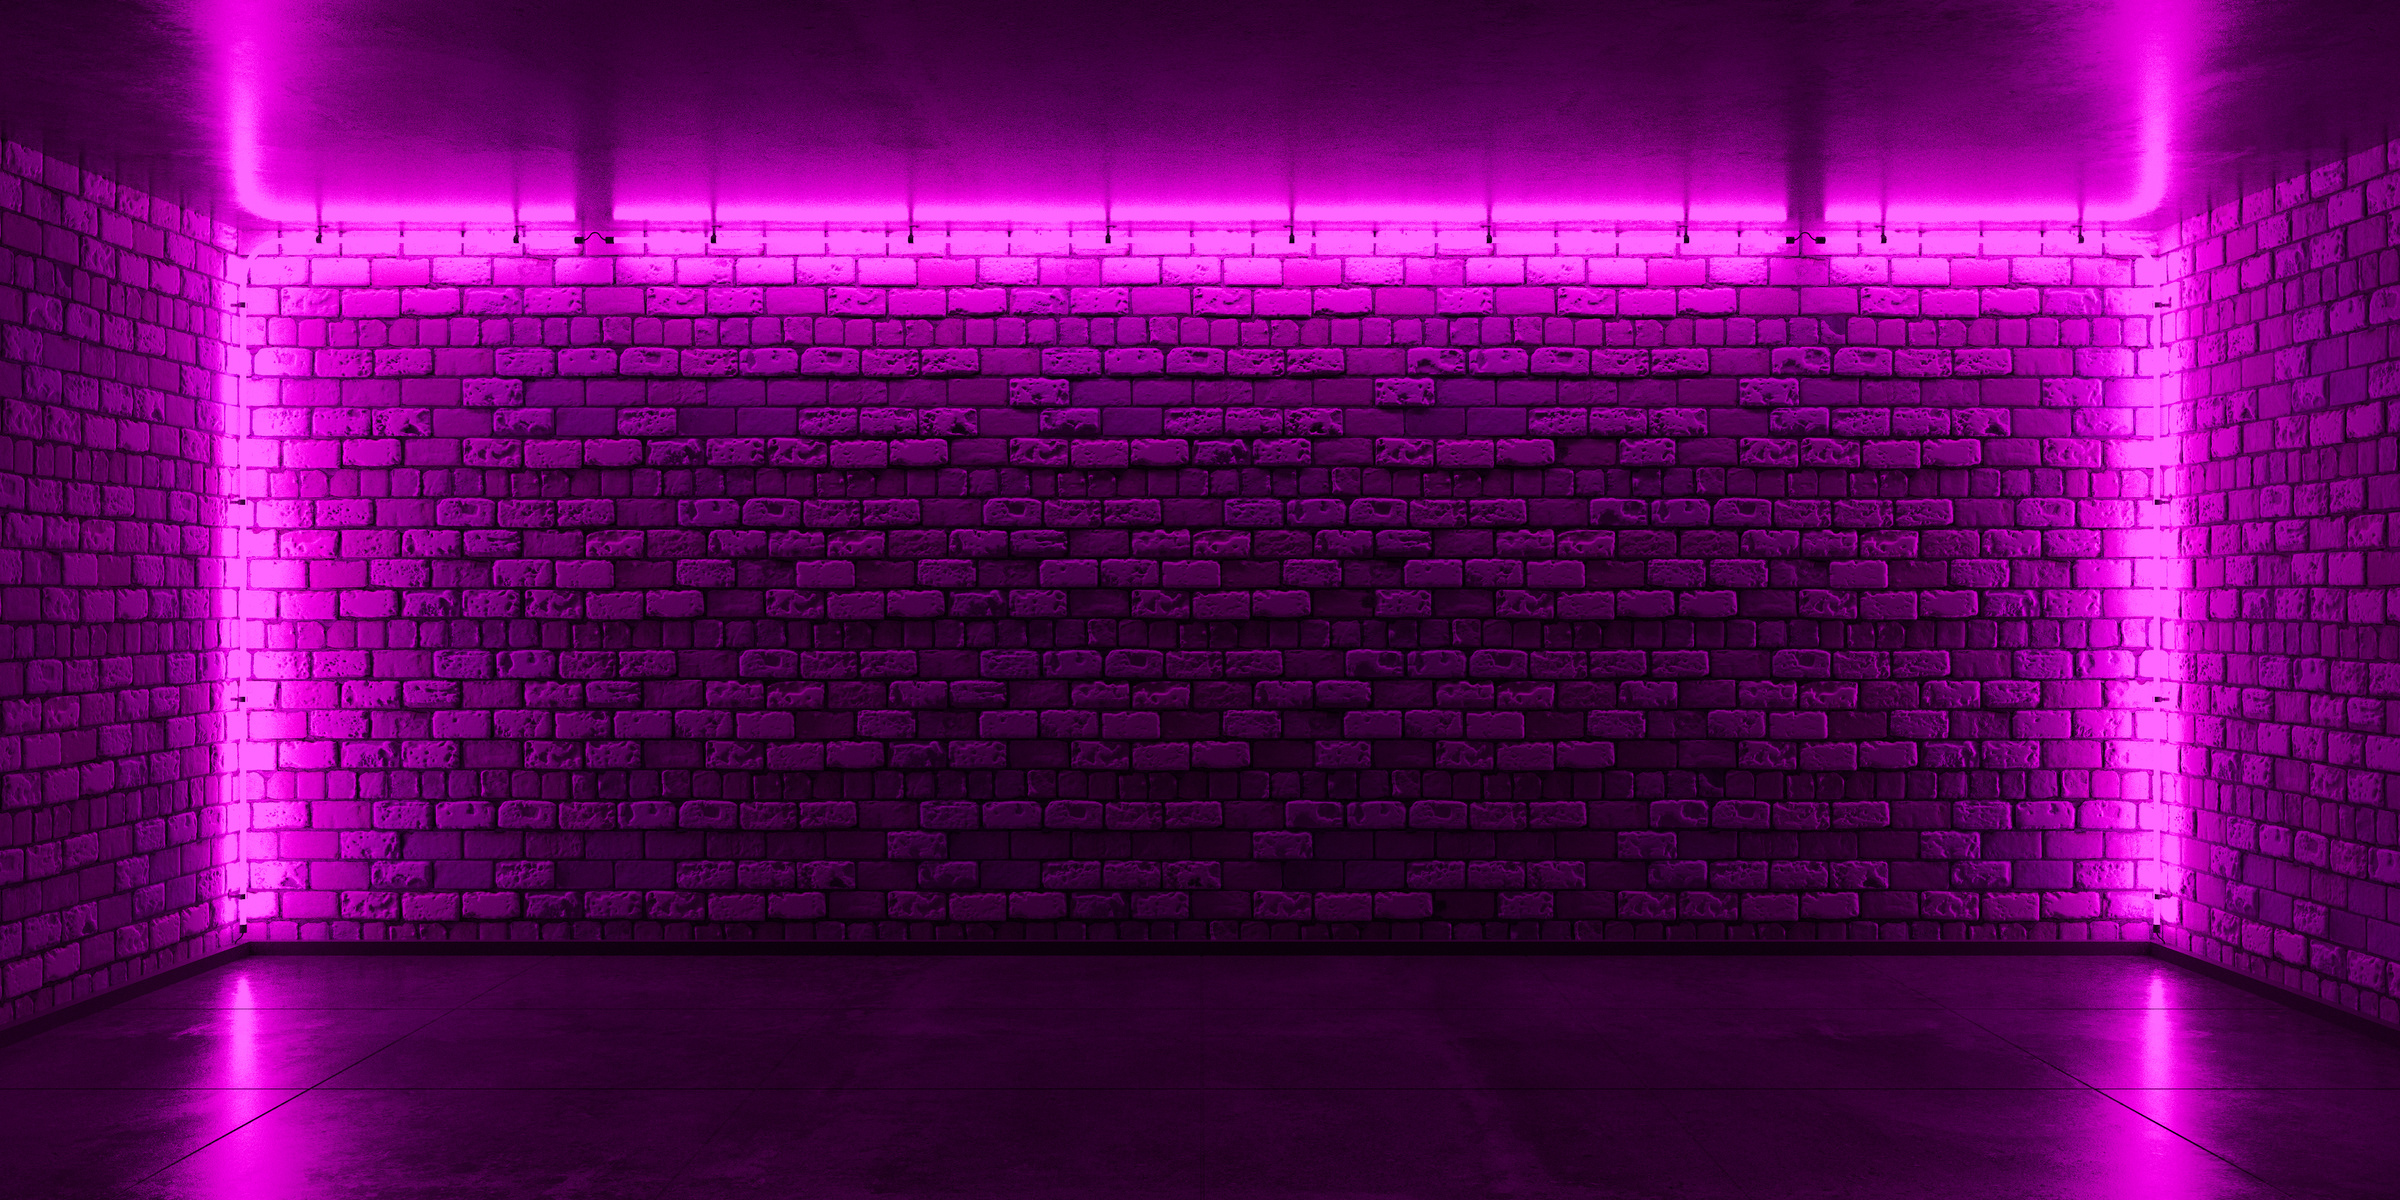 Brick wall, pink neon light, neon stage background